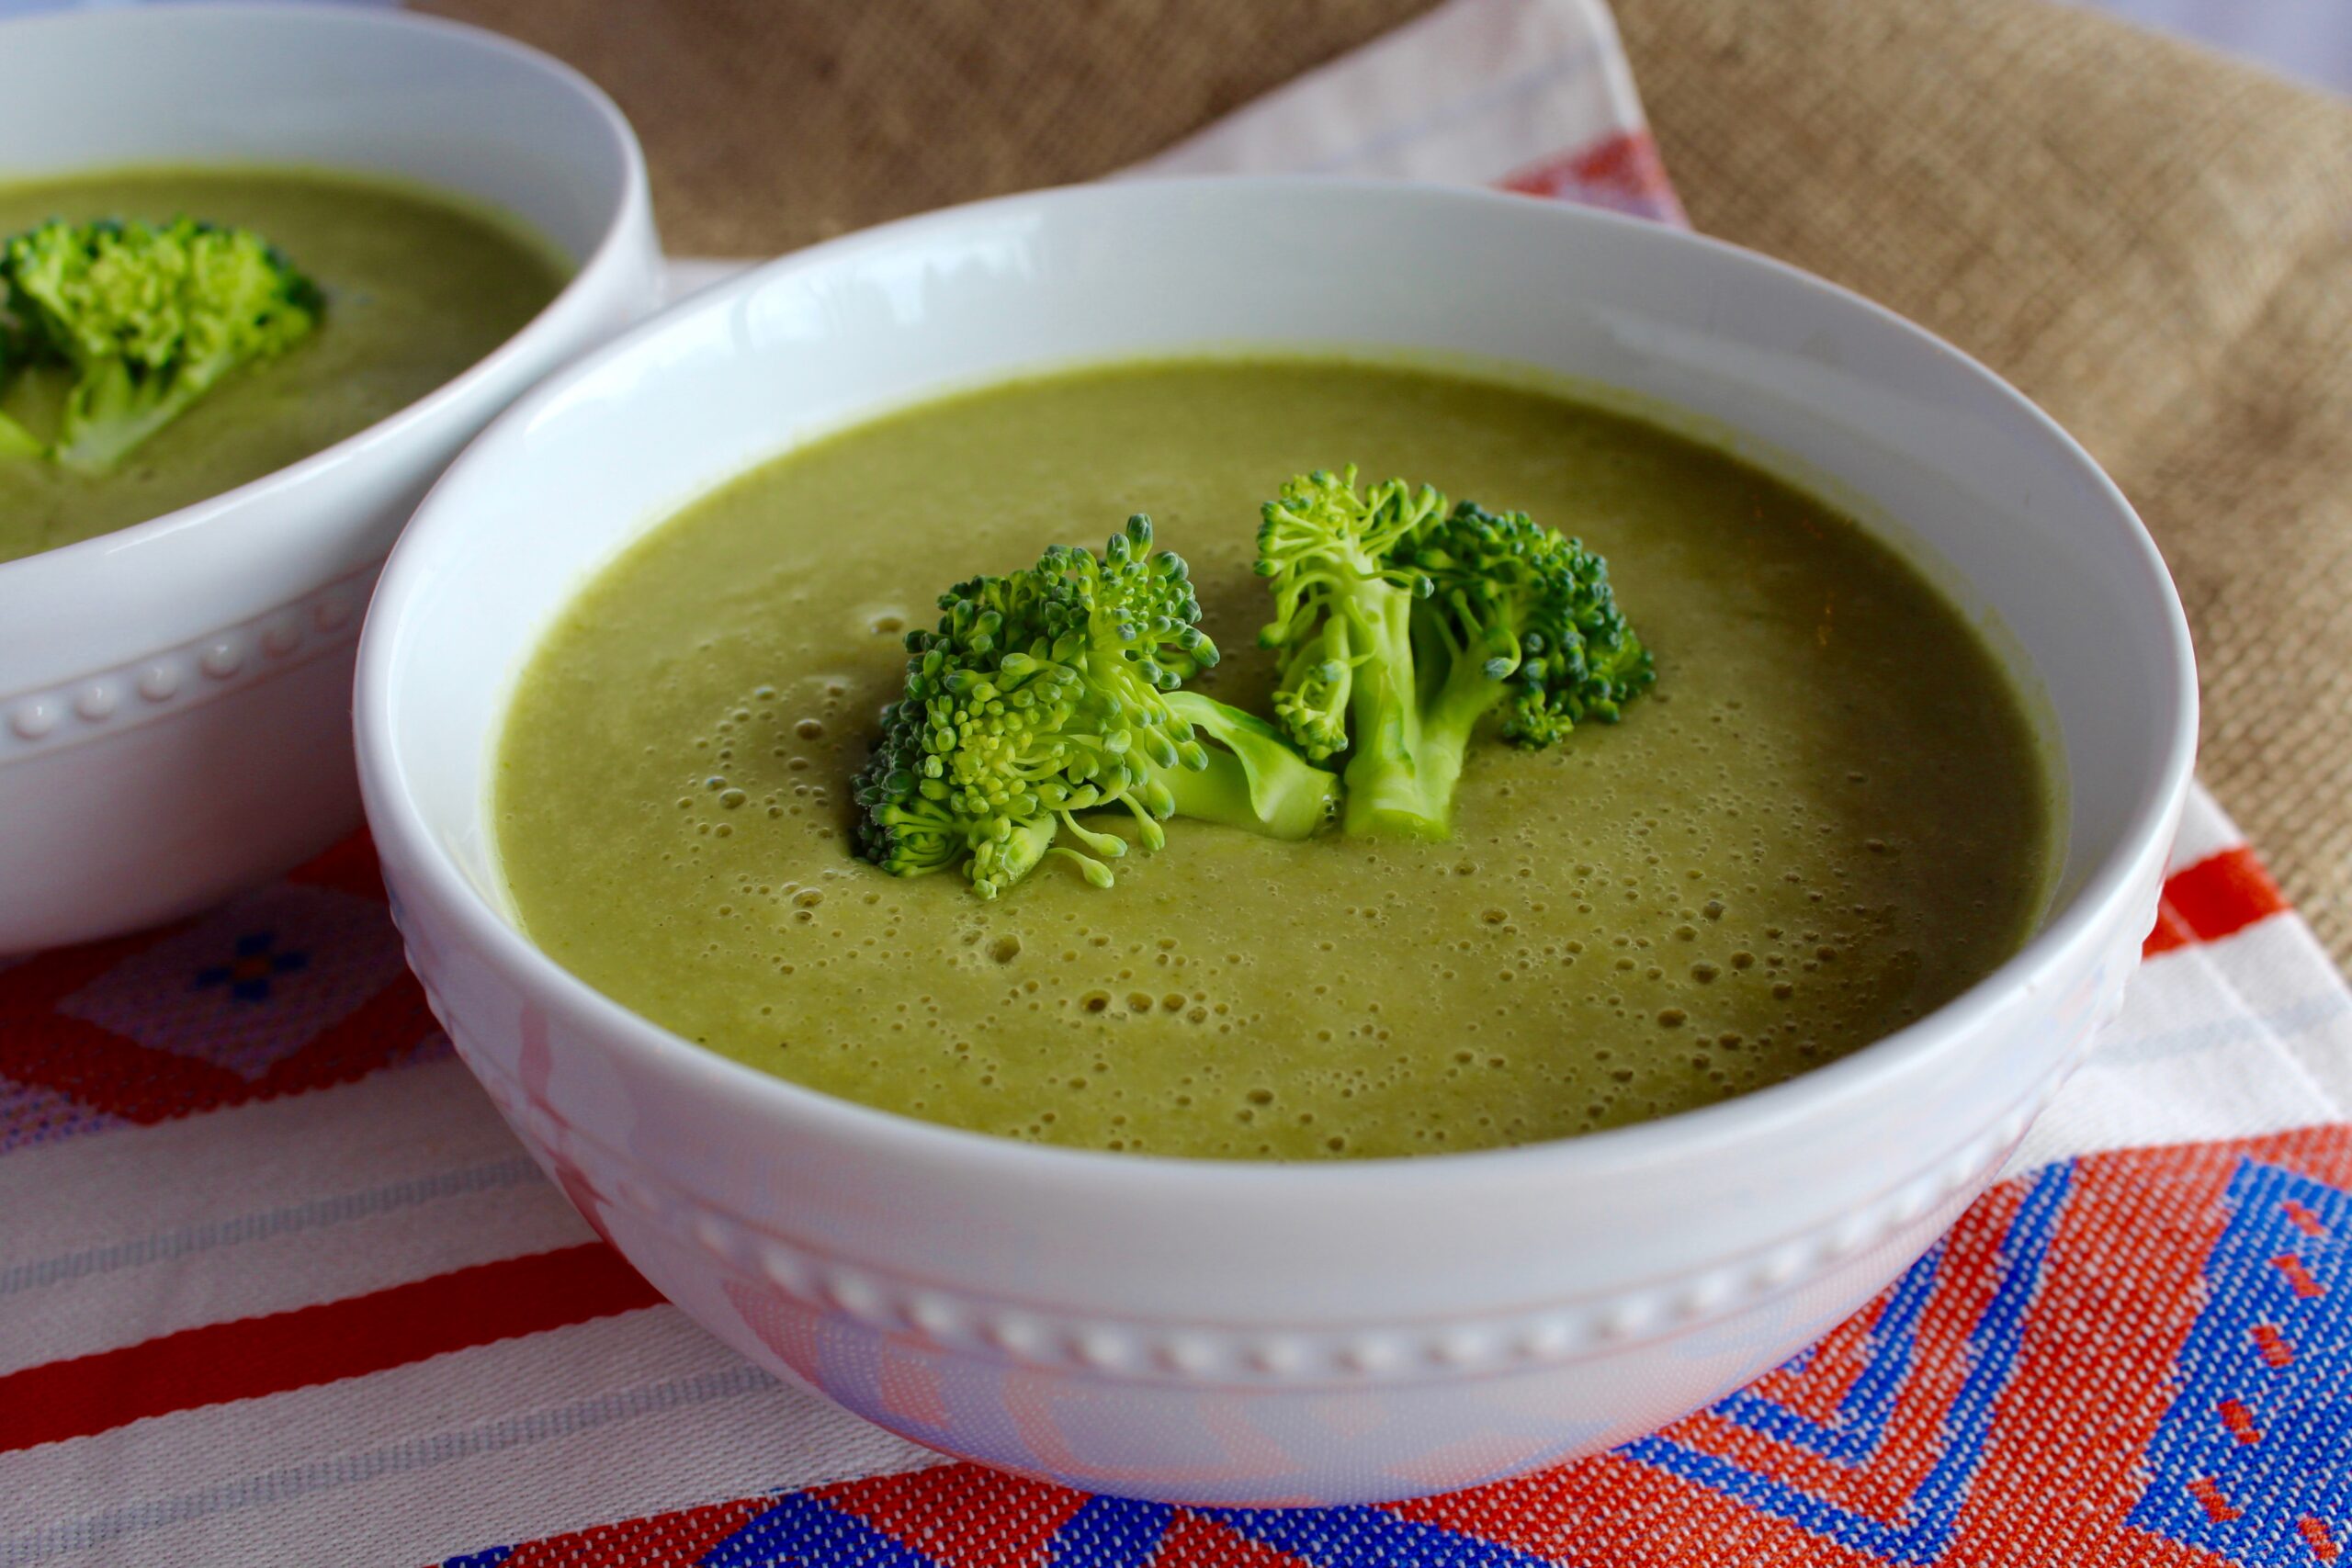 Creamy Vegan Broccoli Soup